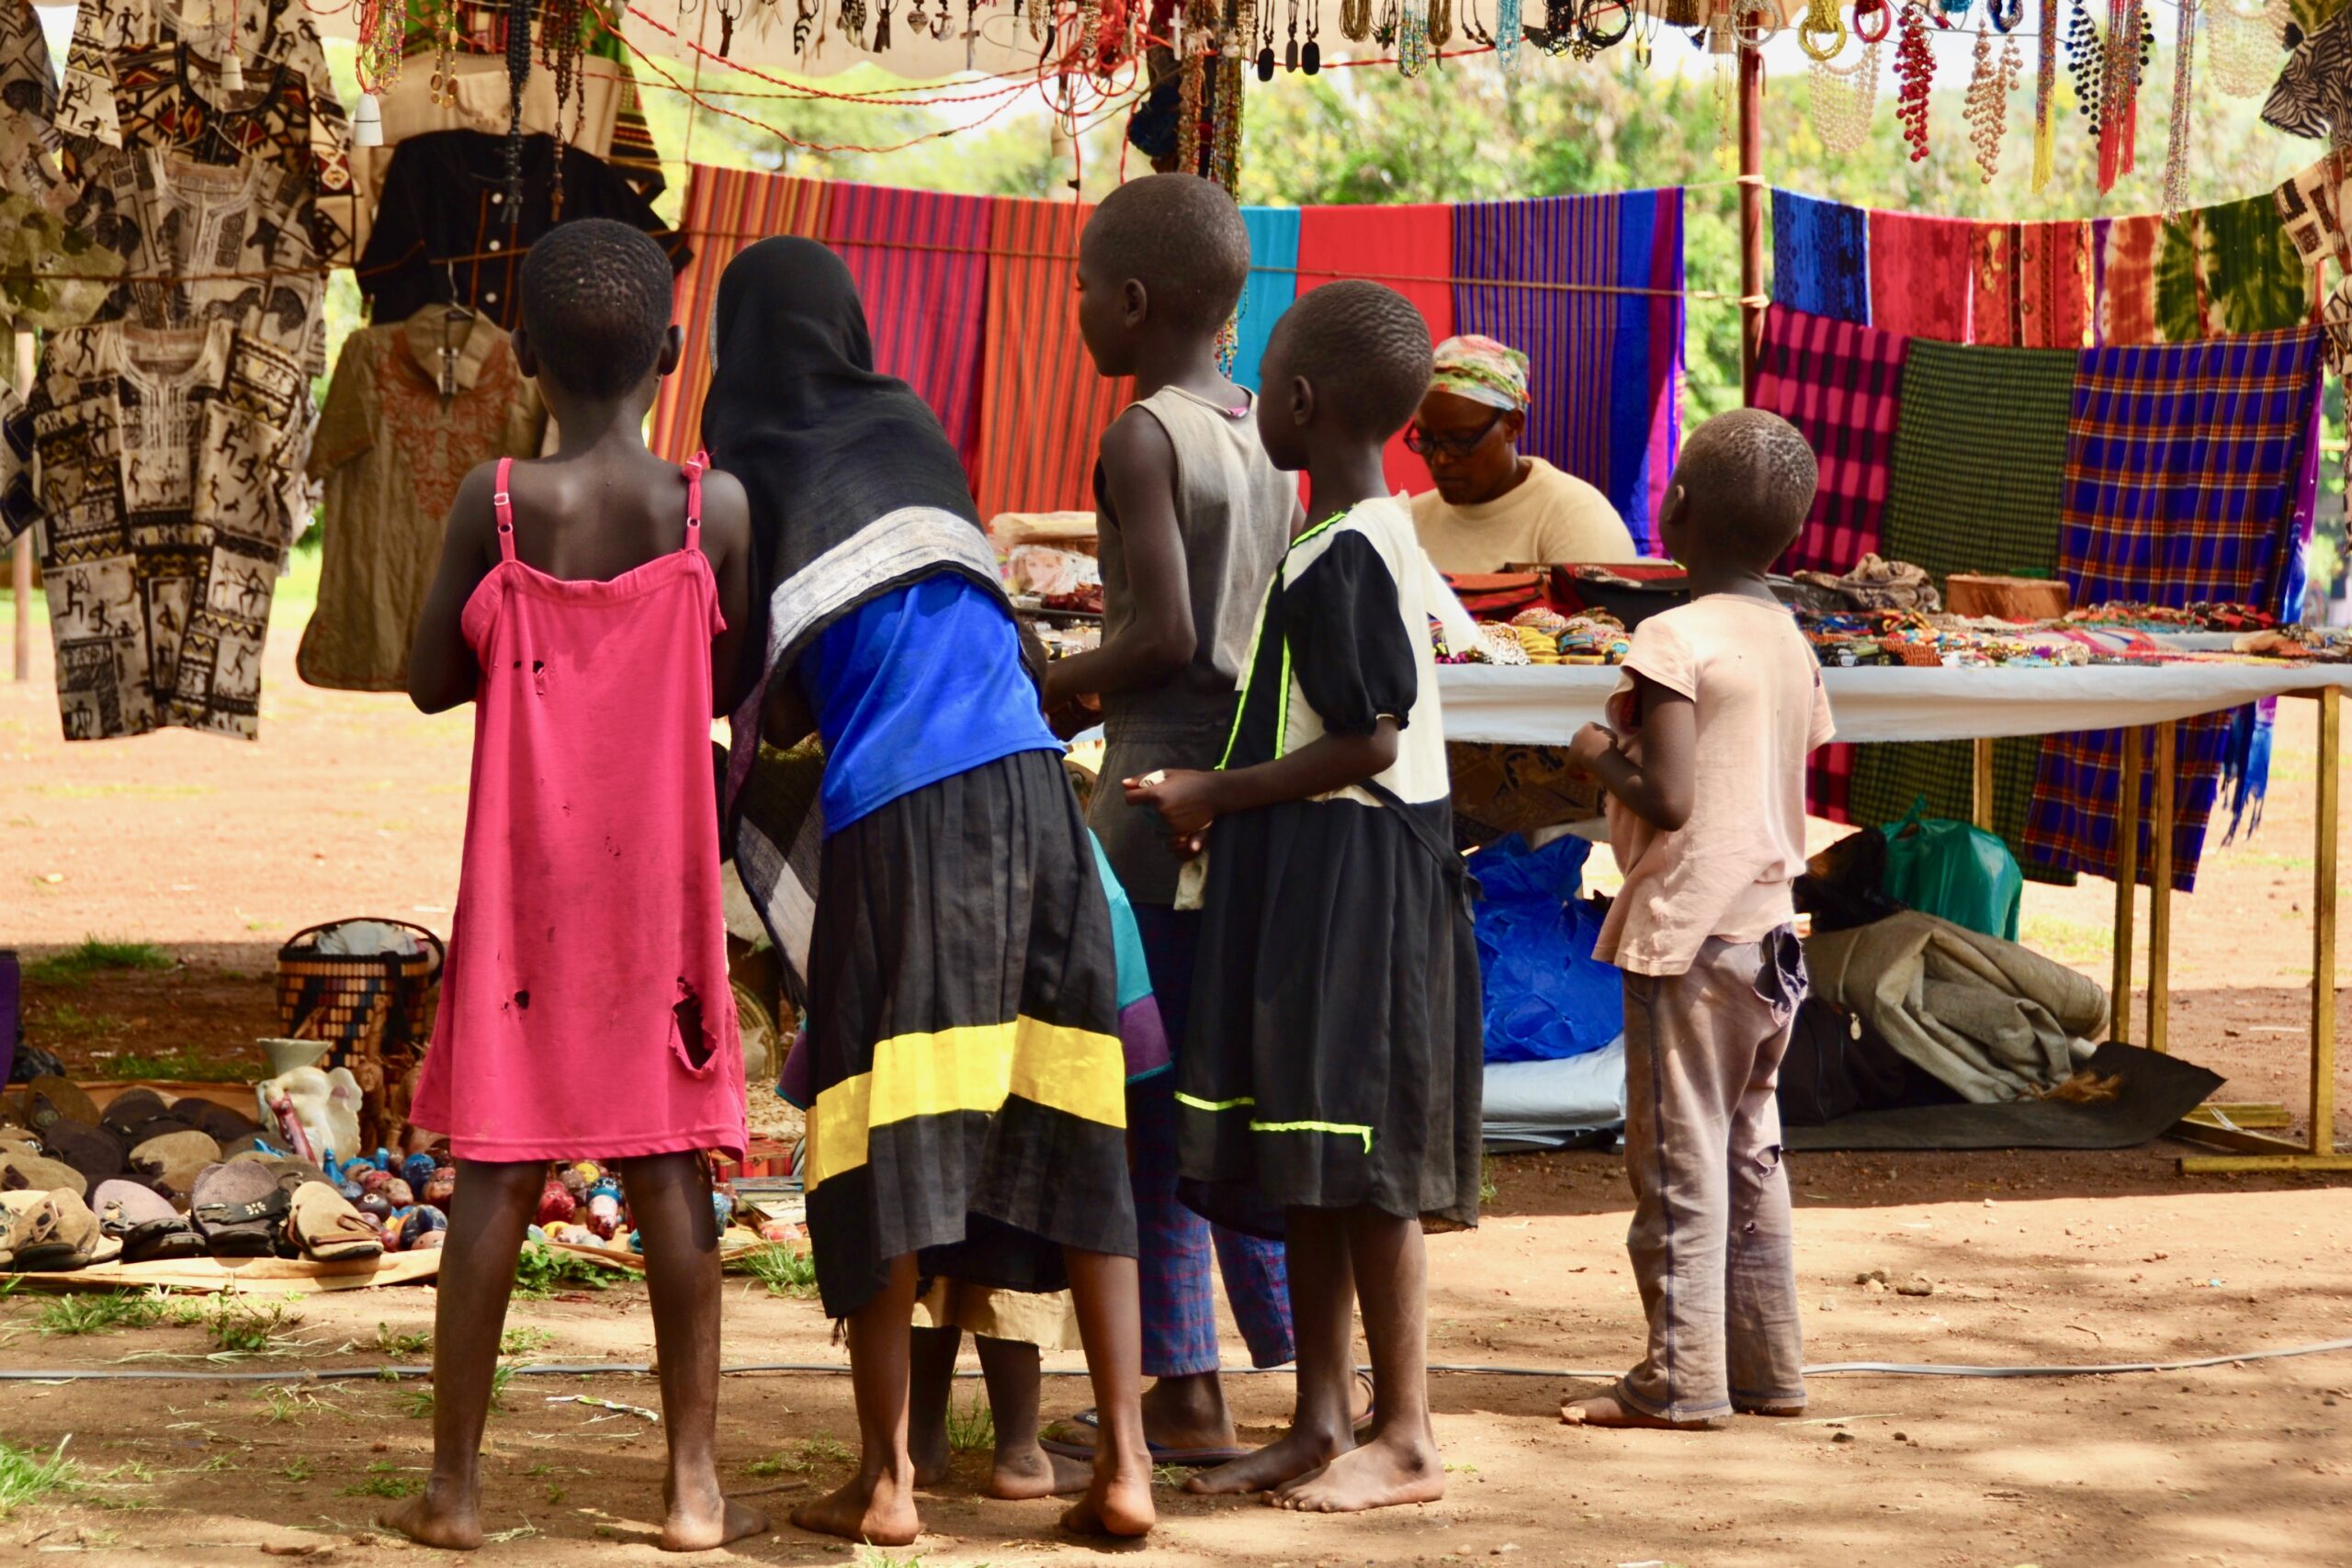 Children at a market in Uganda